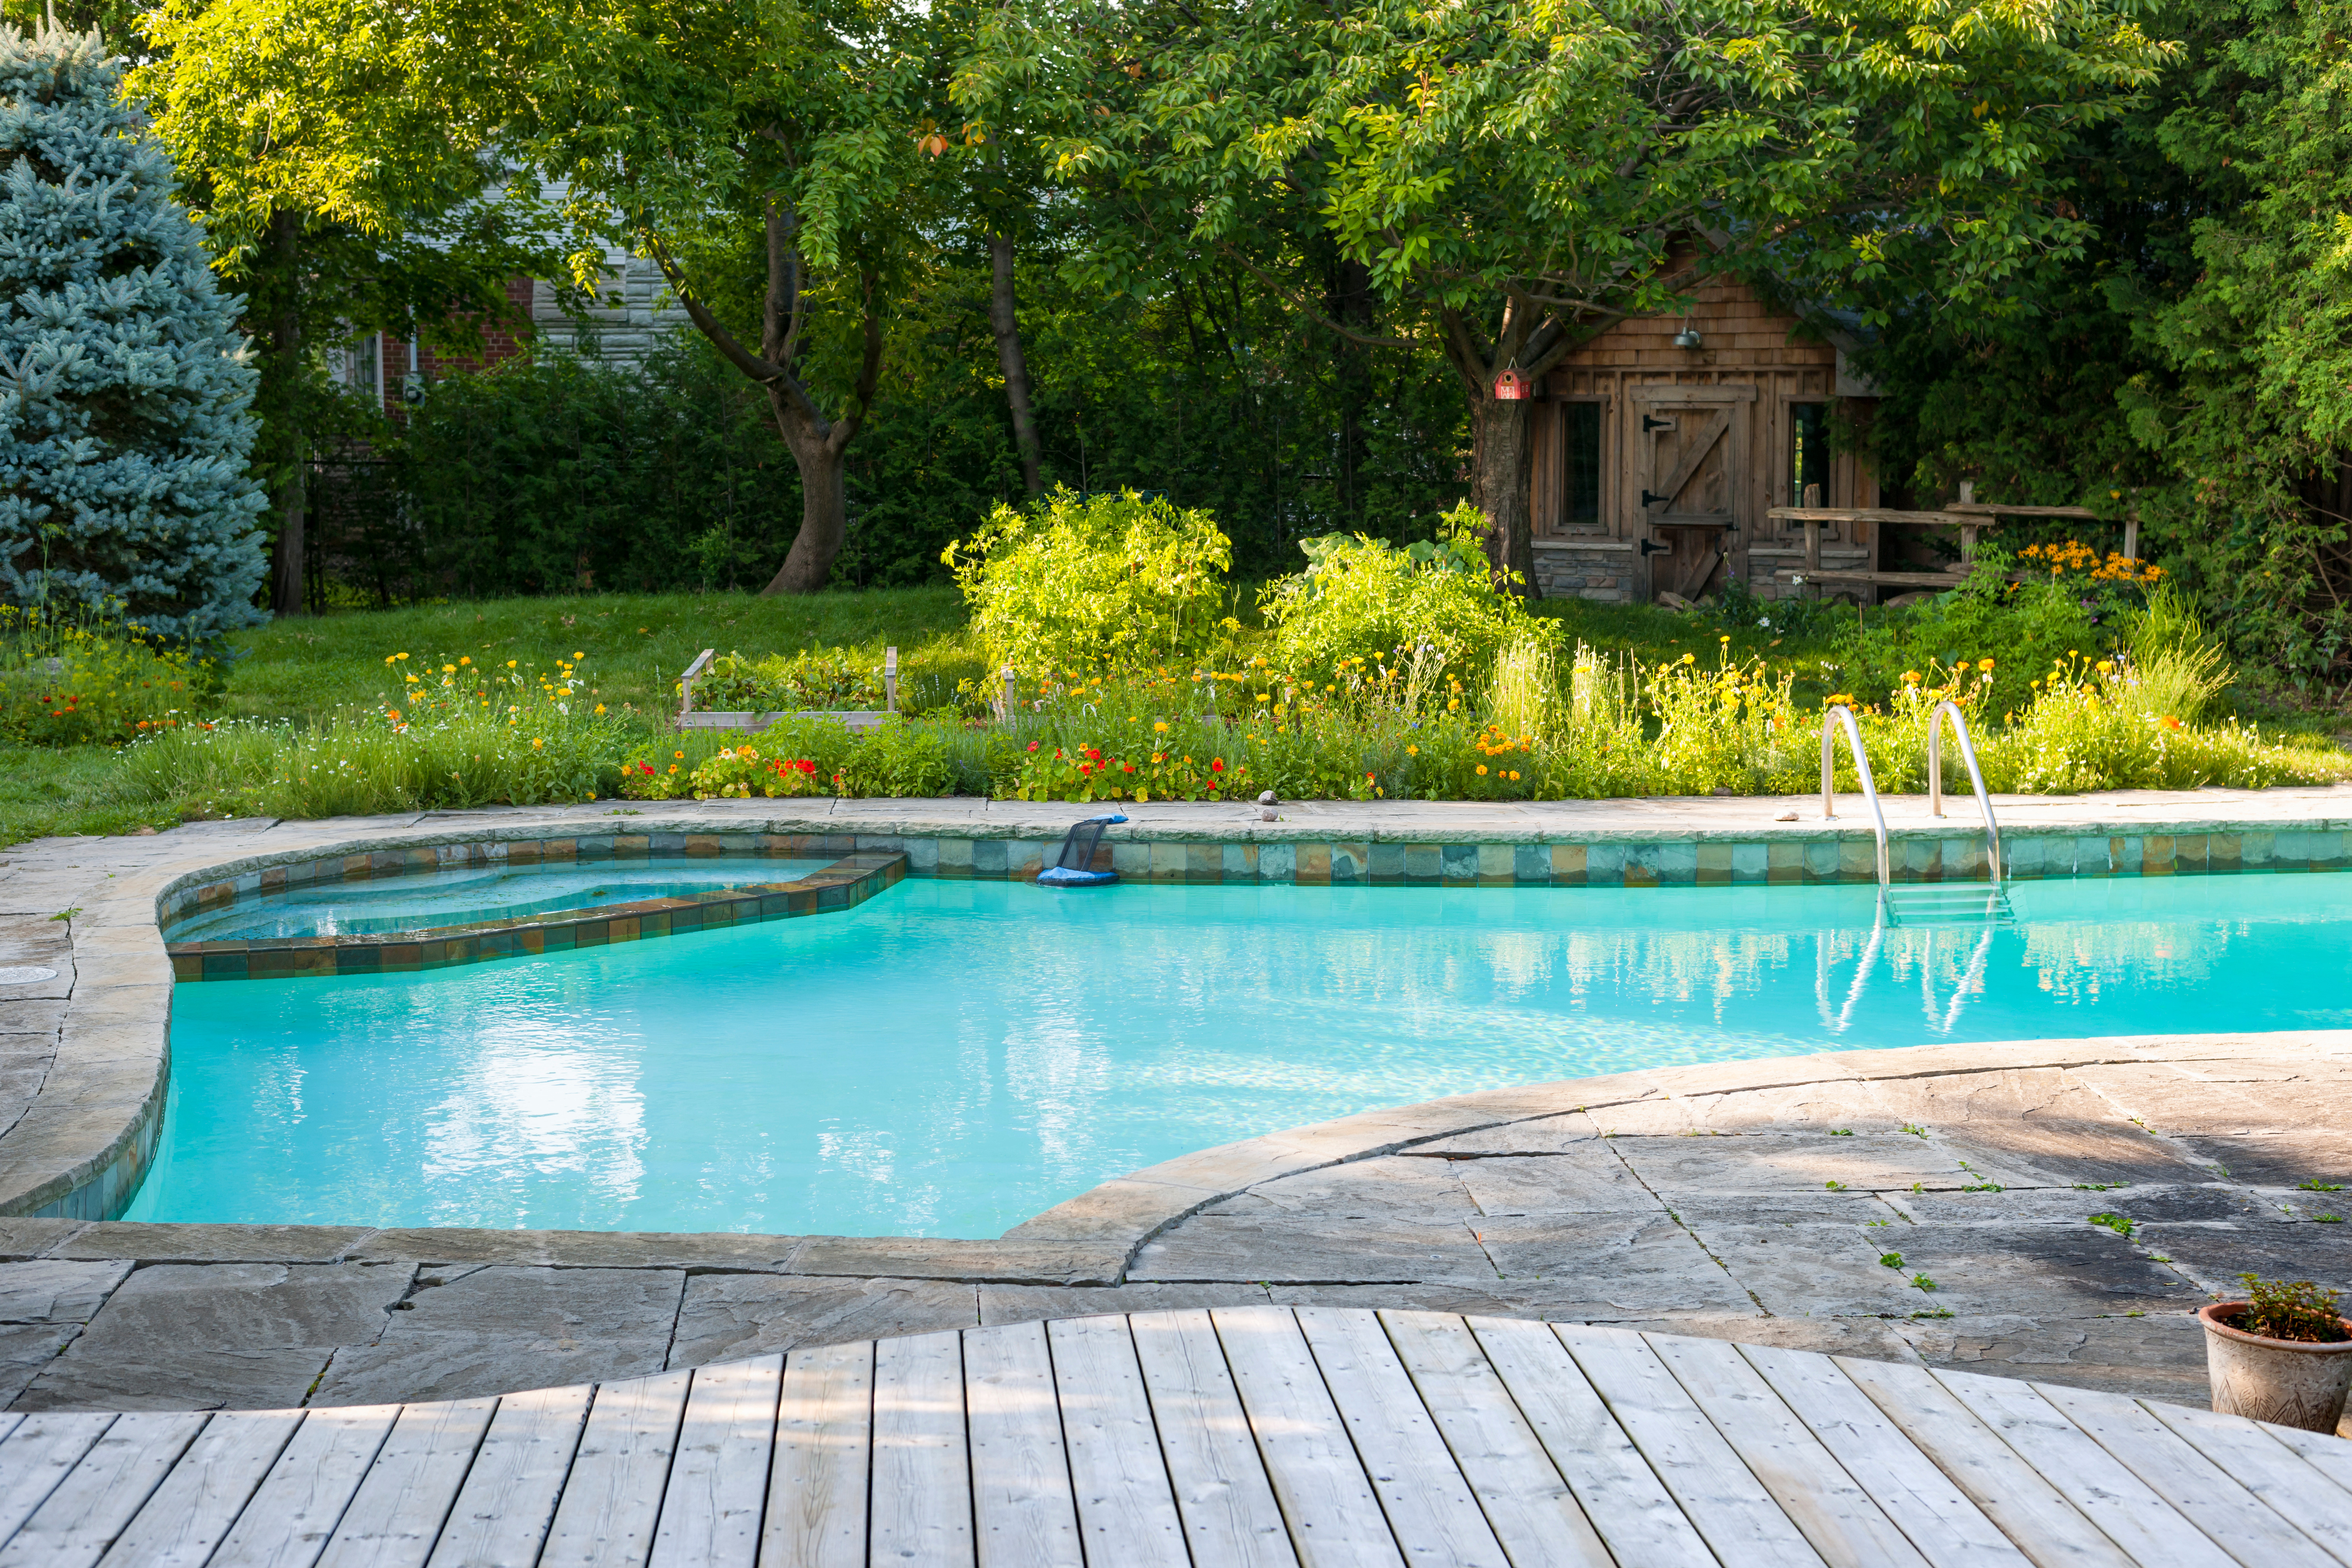 Concrete pool in backyard of home with gazebo.